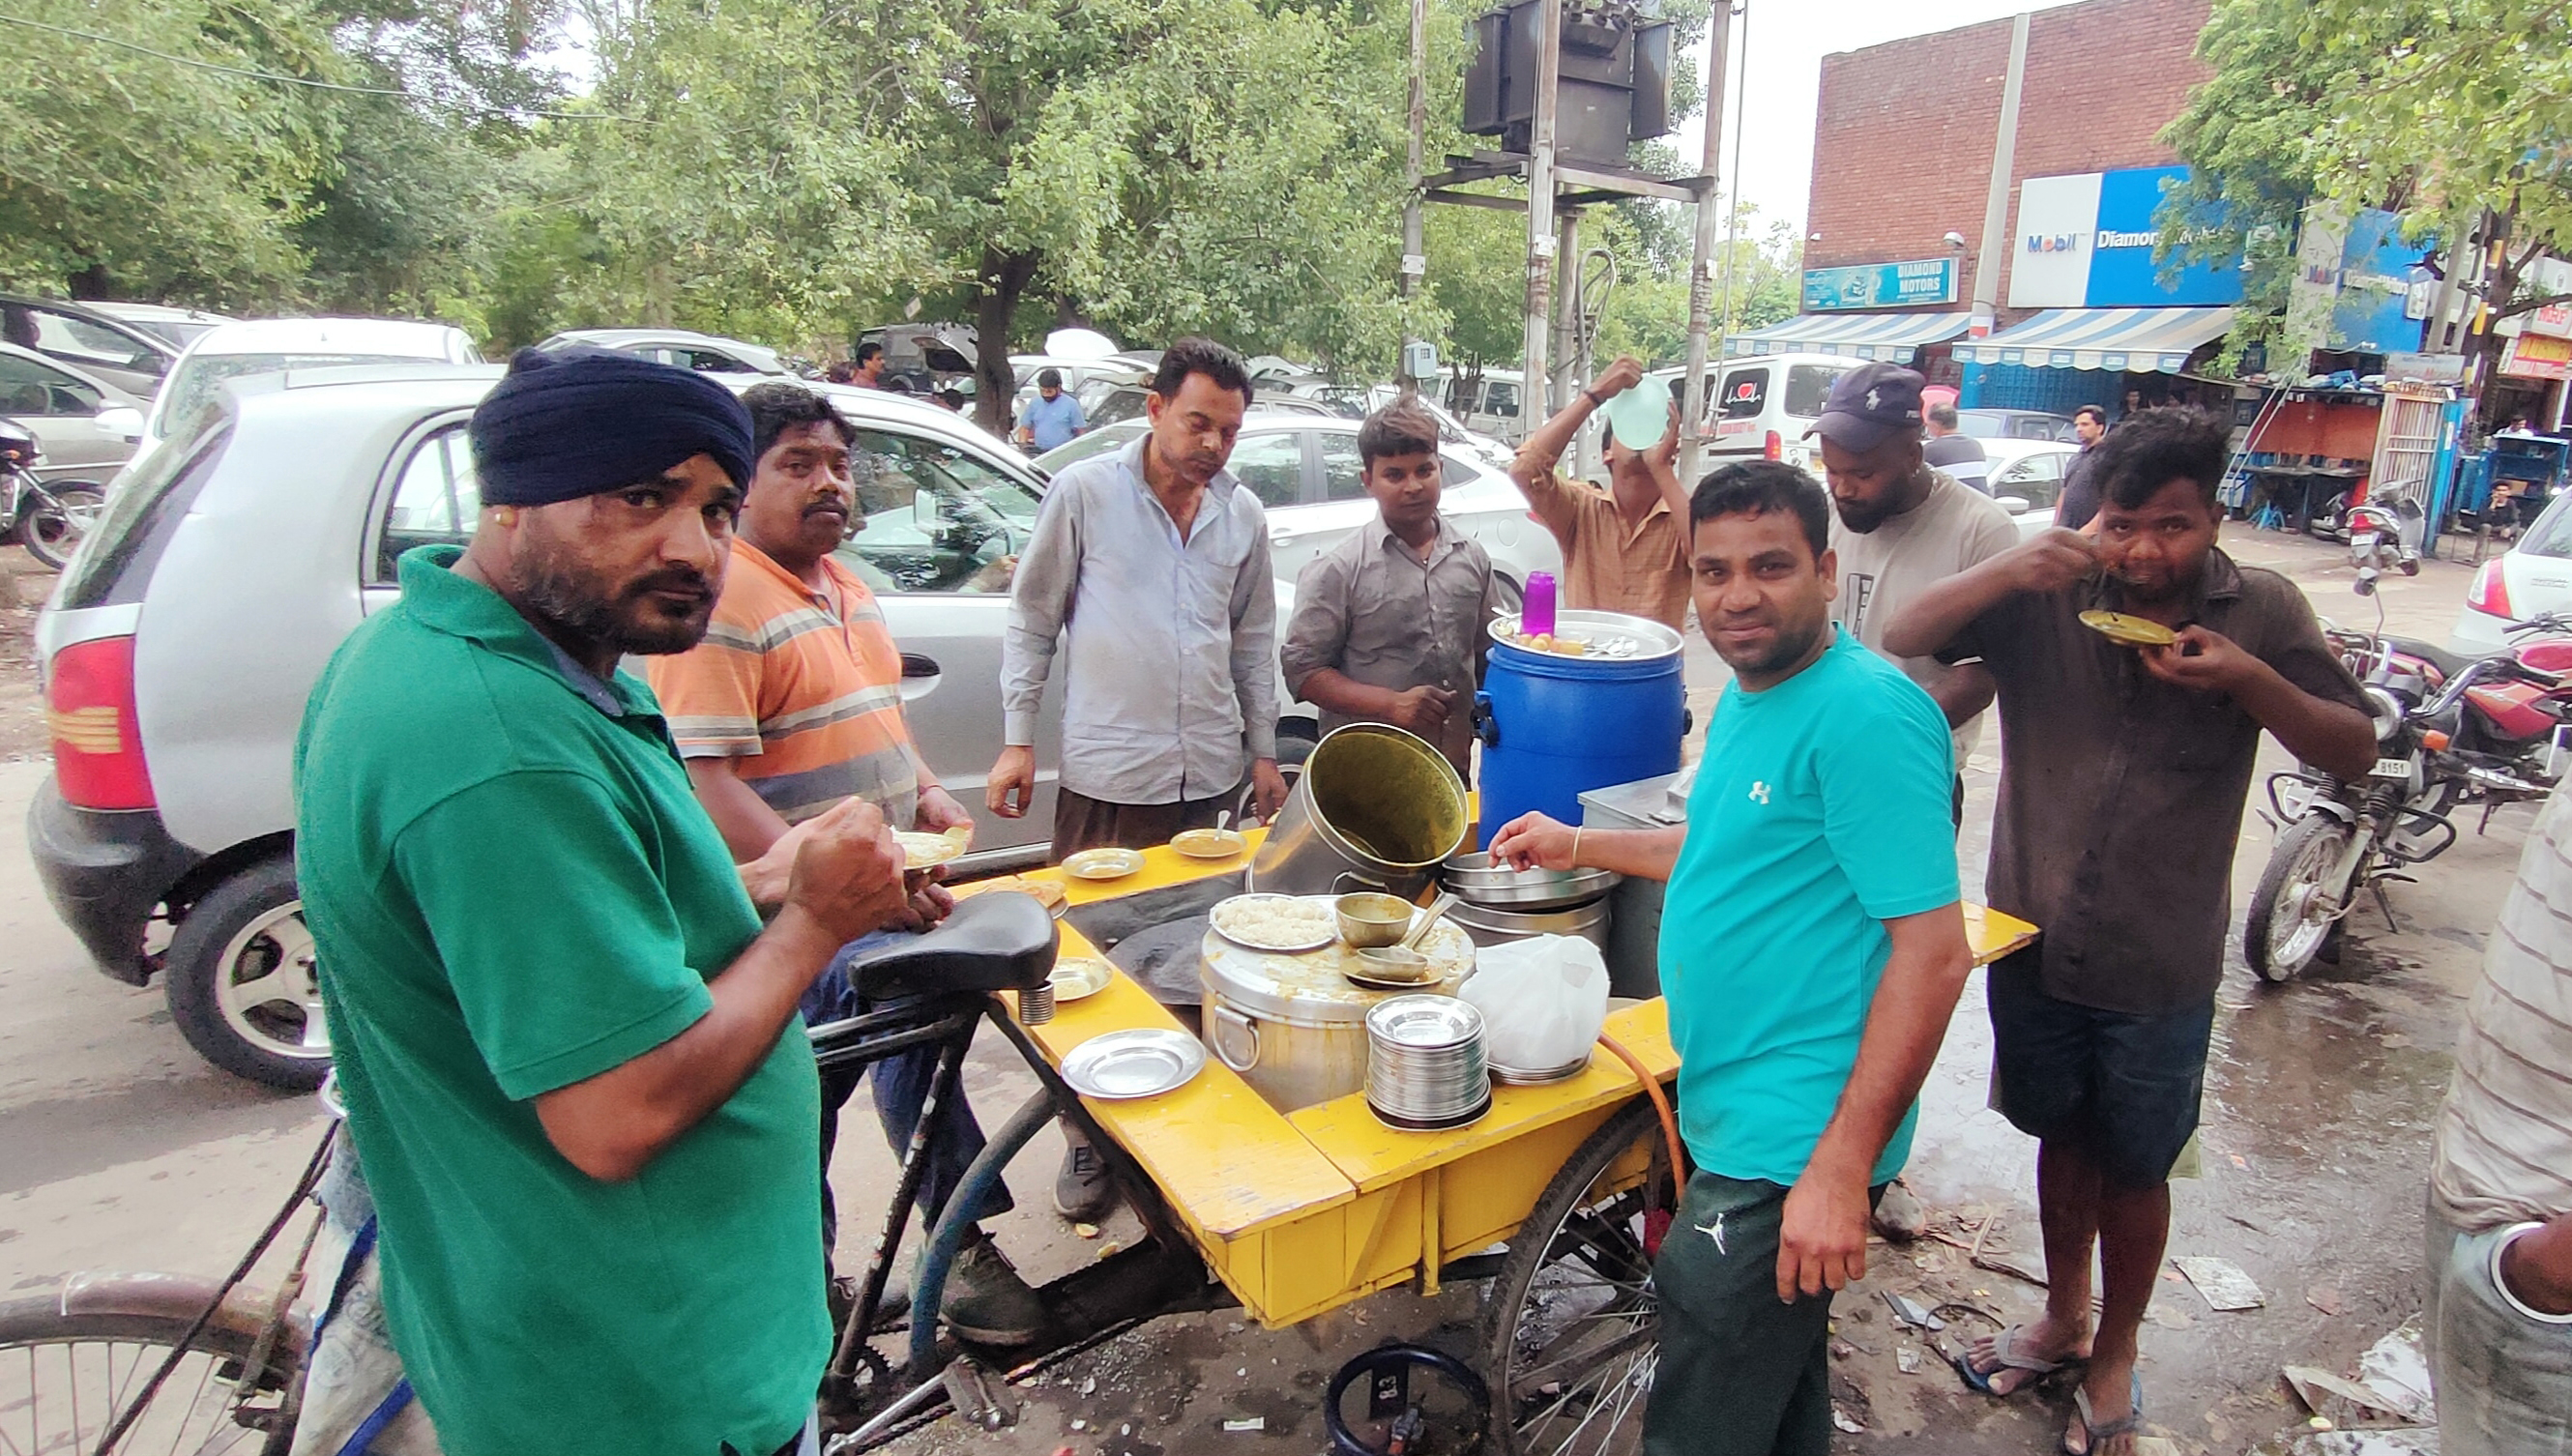 Get street food delivered on doorstep via apps soon in Chandigarh